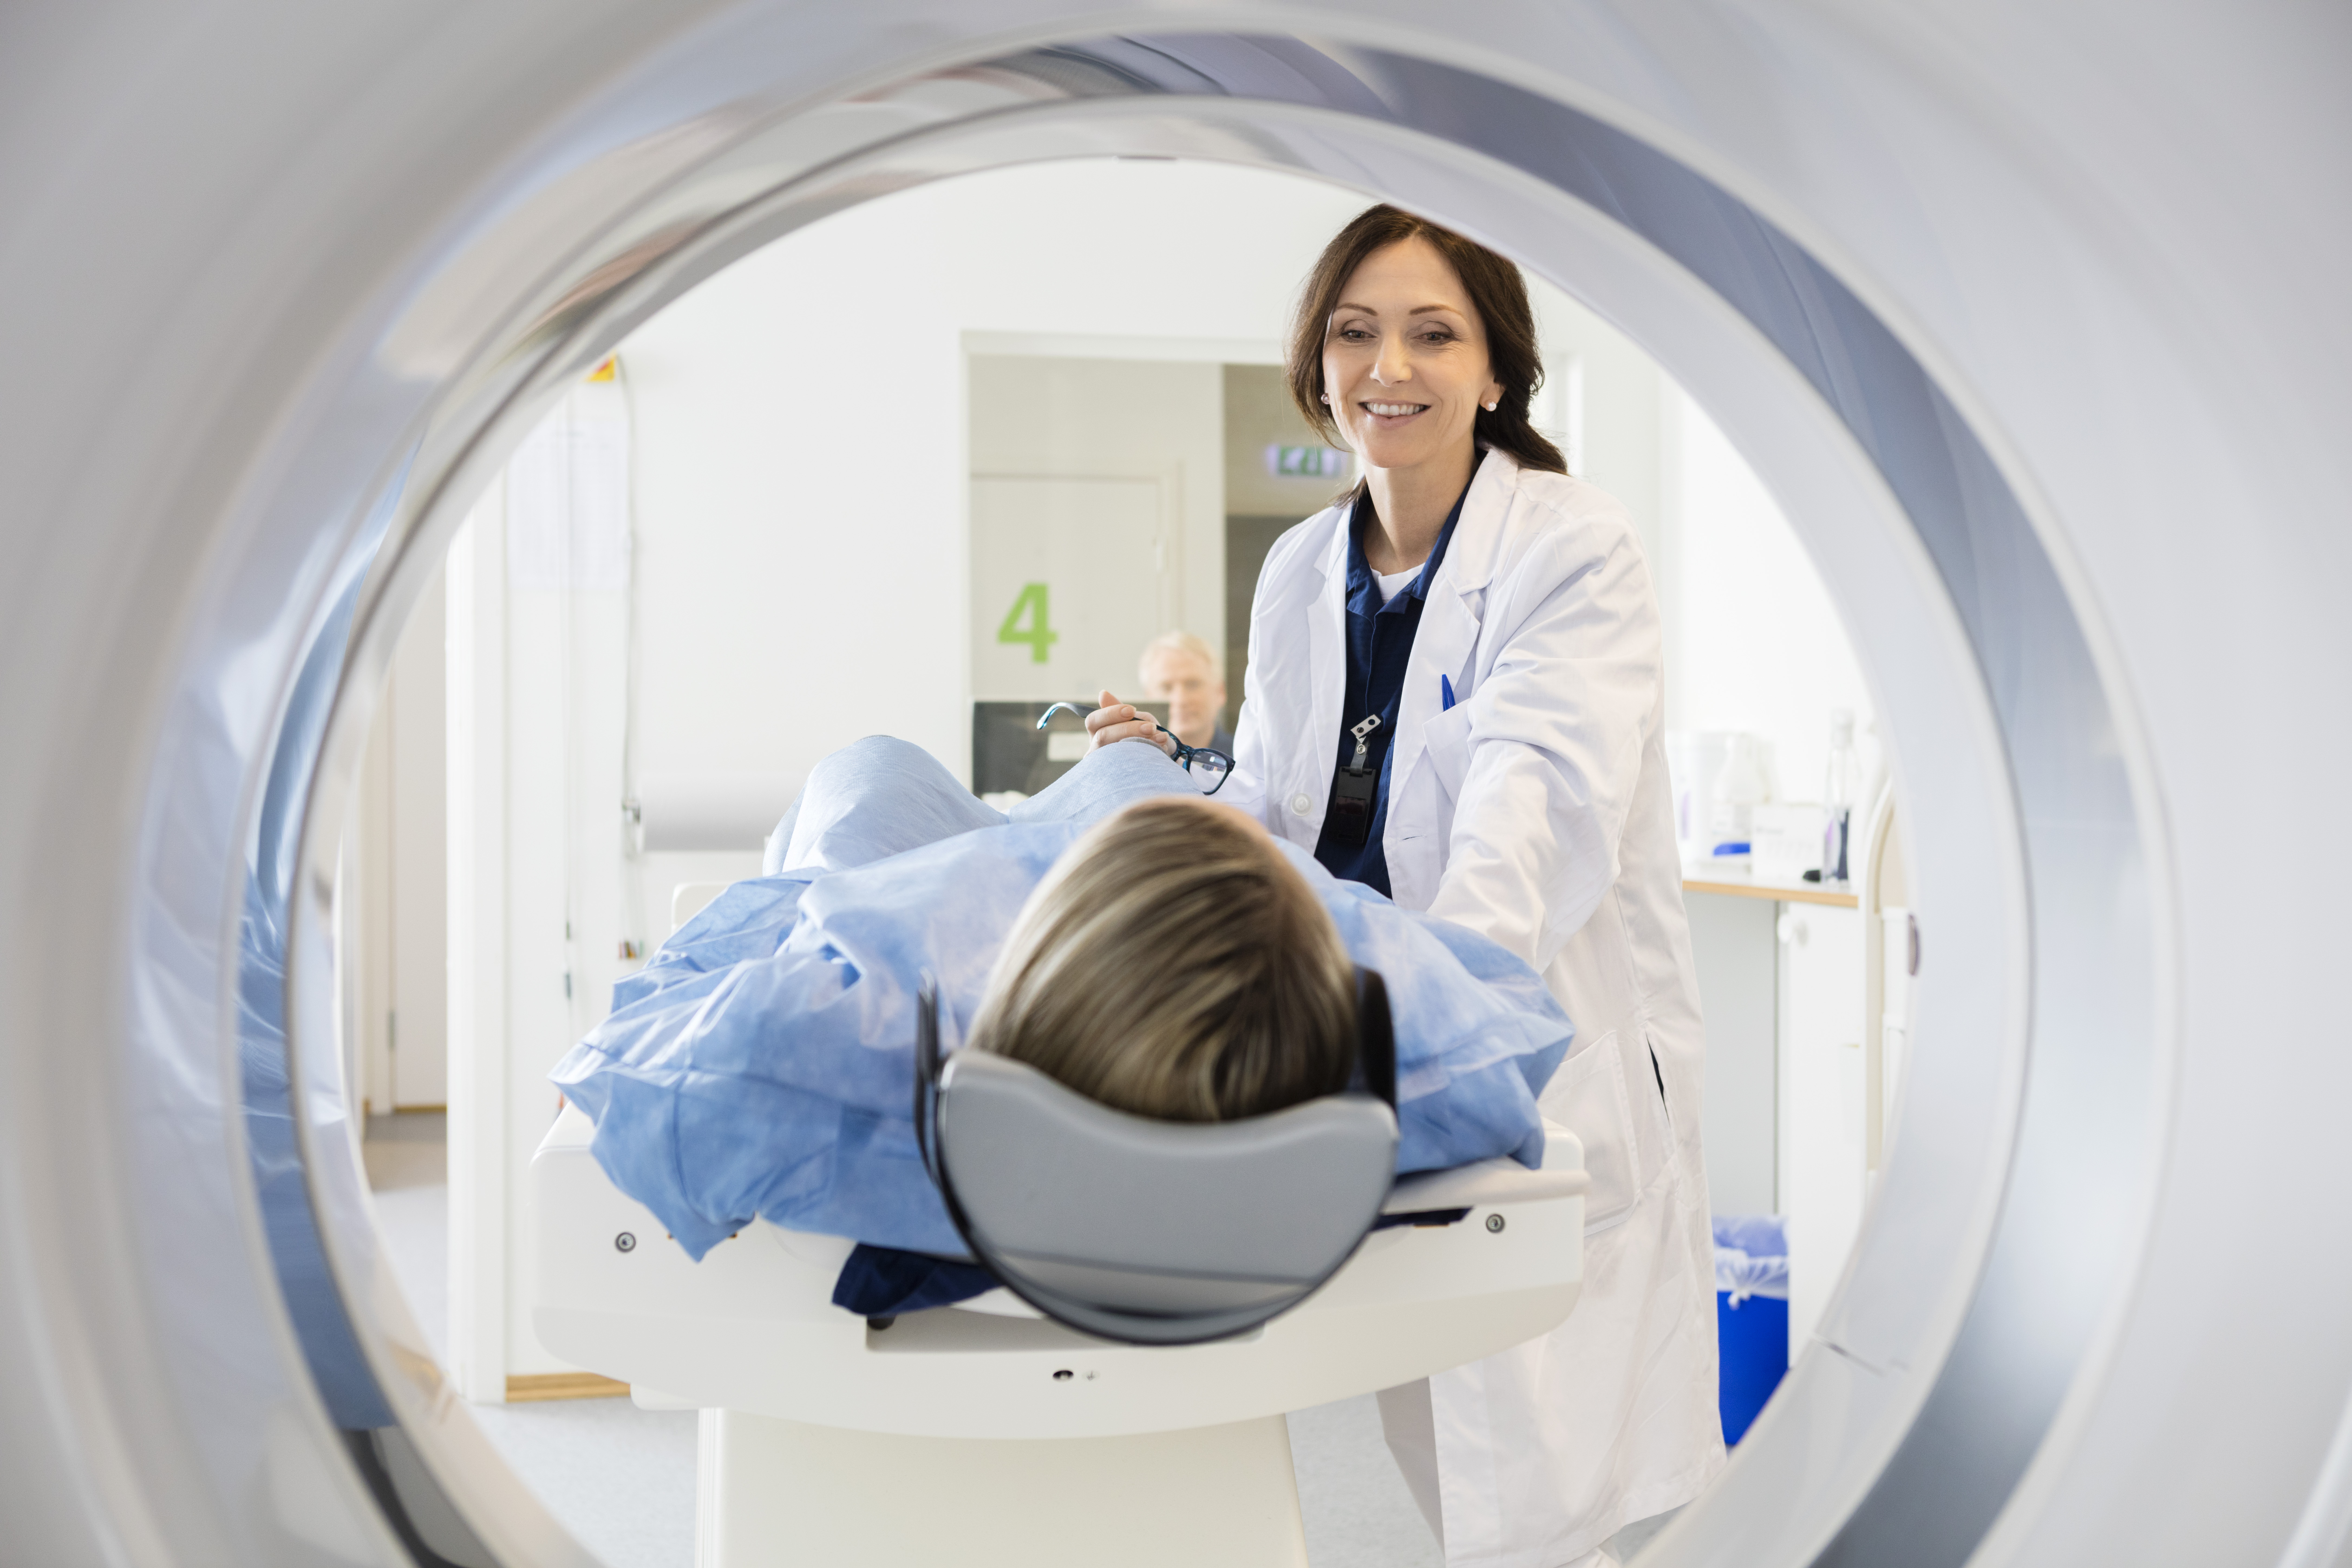 Imaging tech specialist preparing patient for MRI